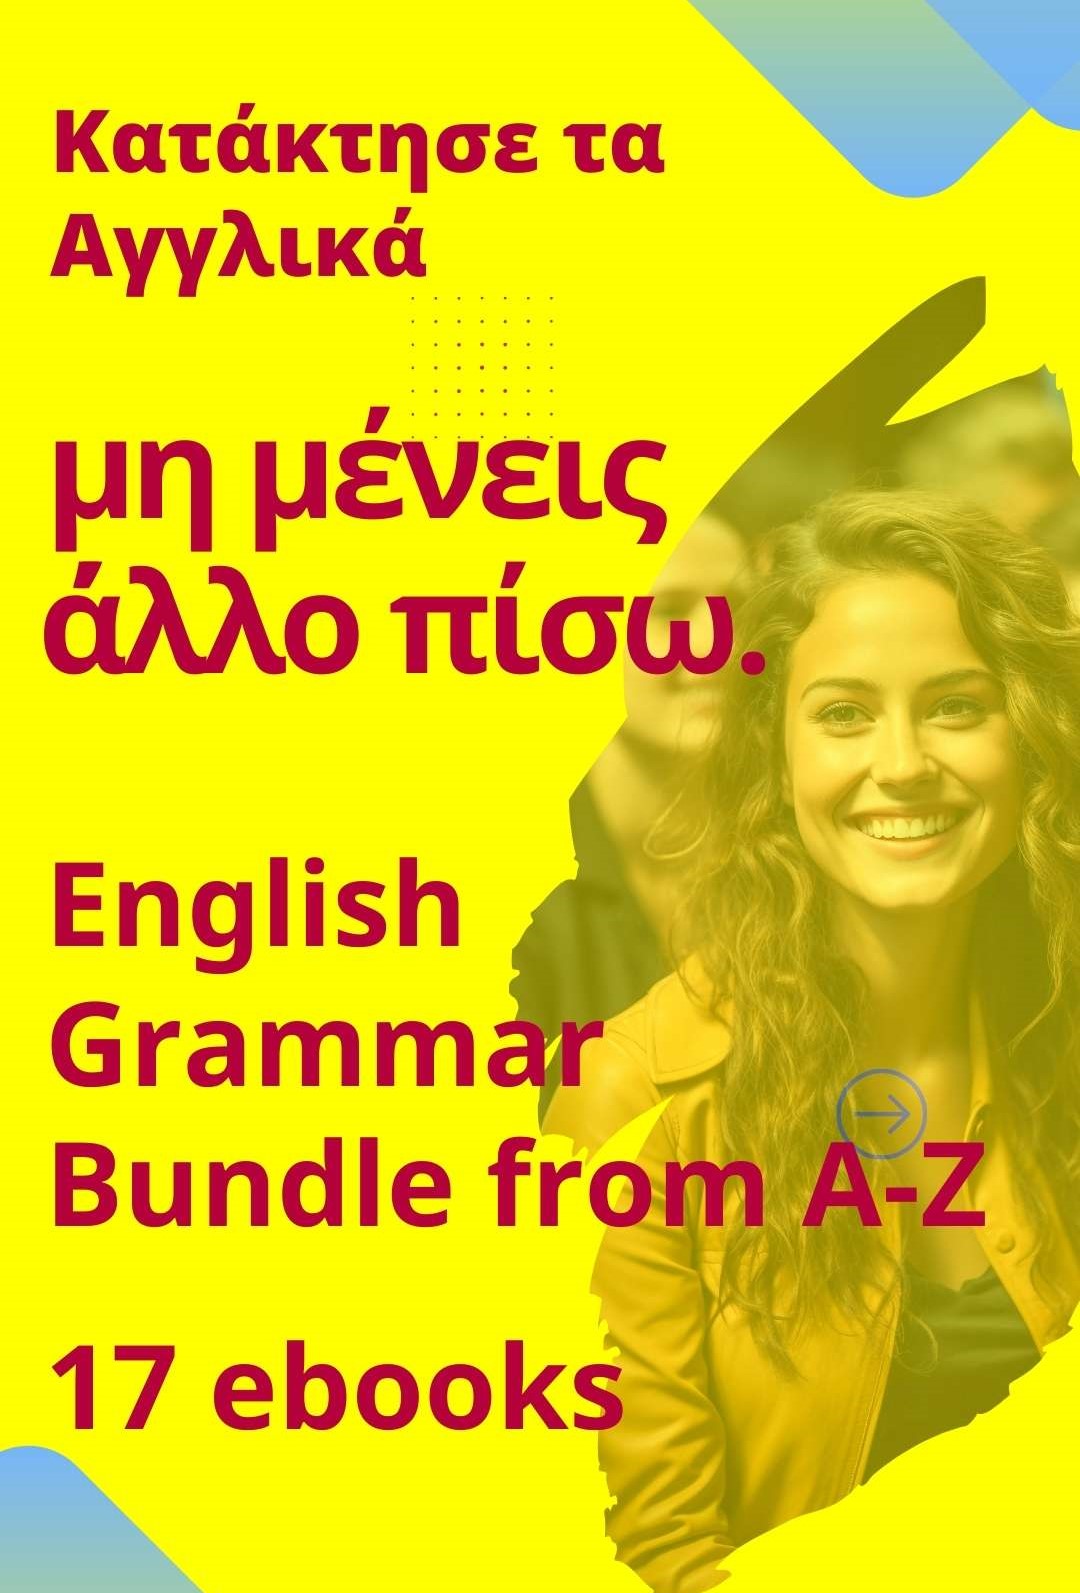 ENGLISH GRAMMAR BUNDLE FROM A-Z - 17 EBOOKS